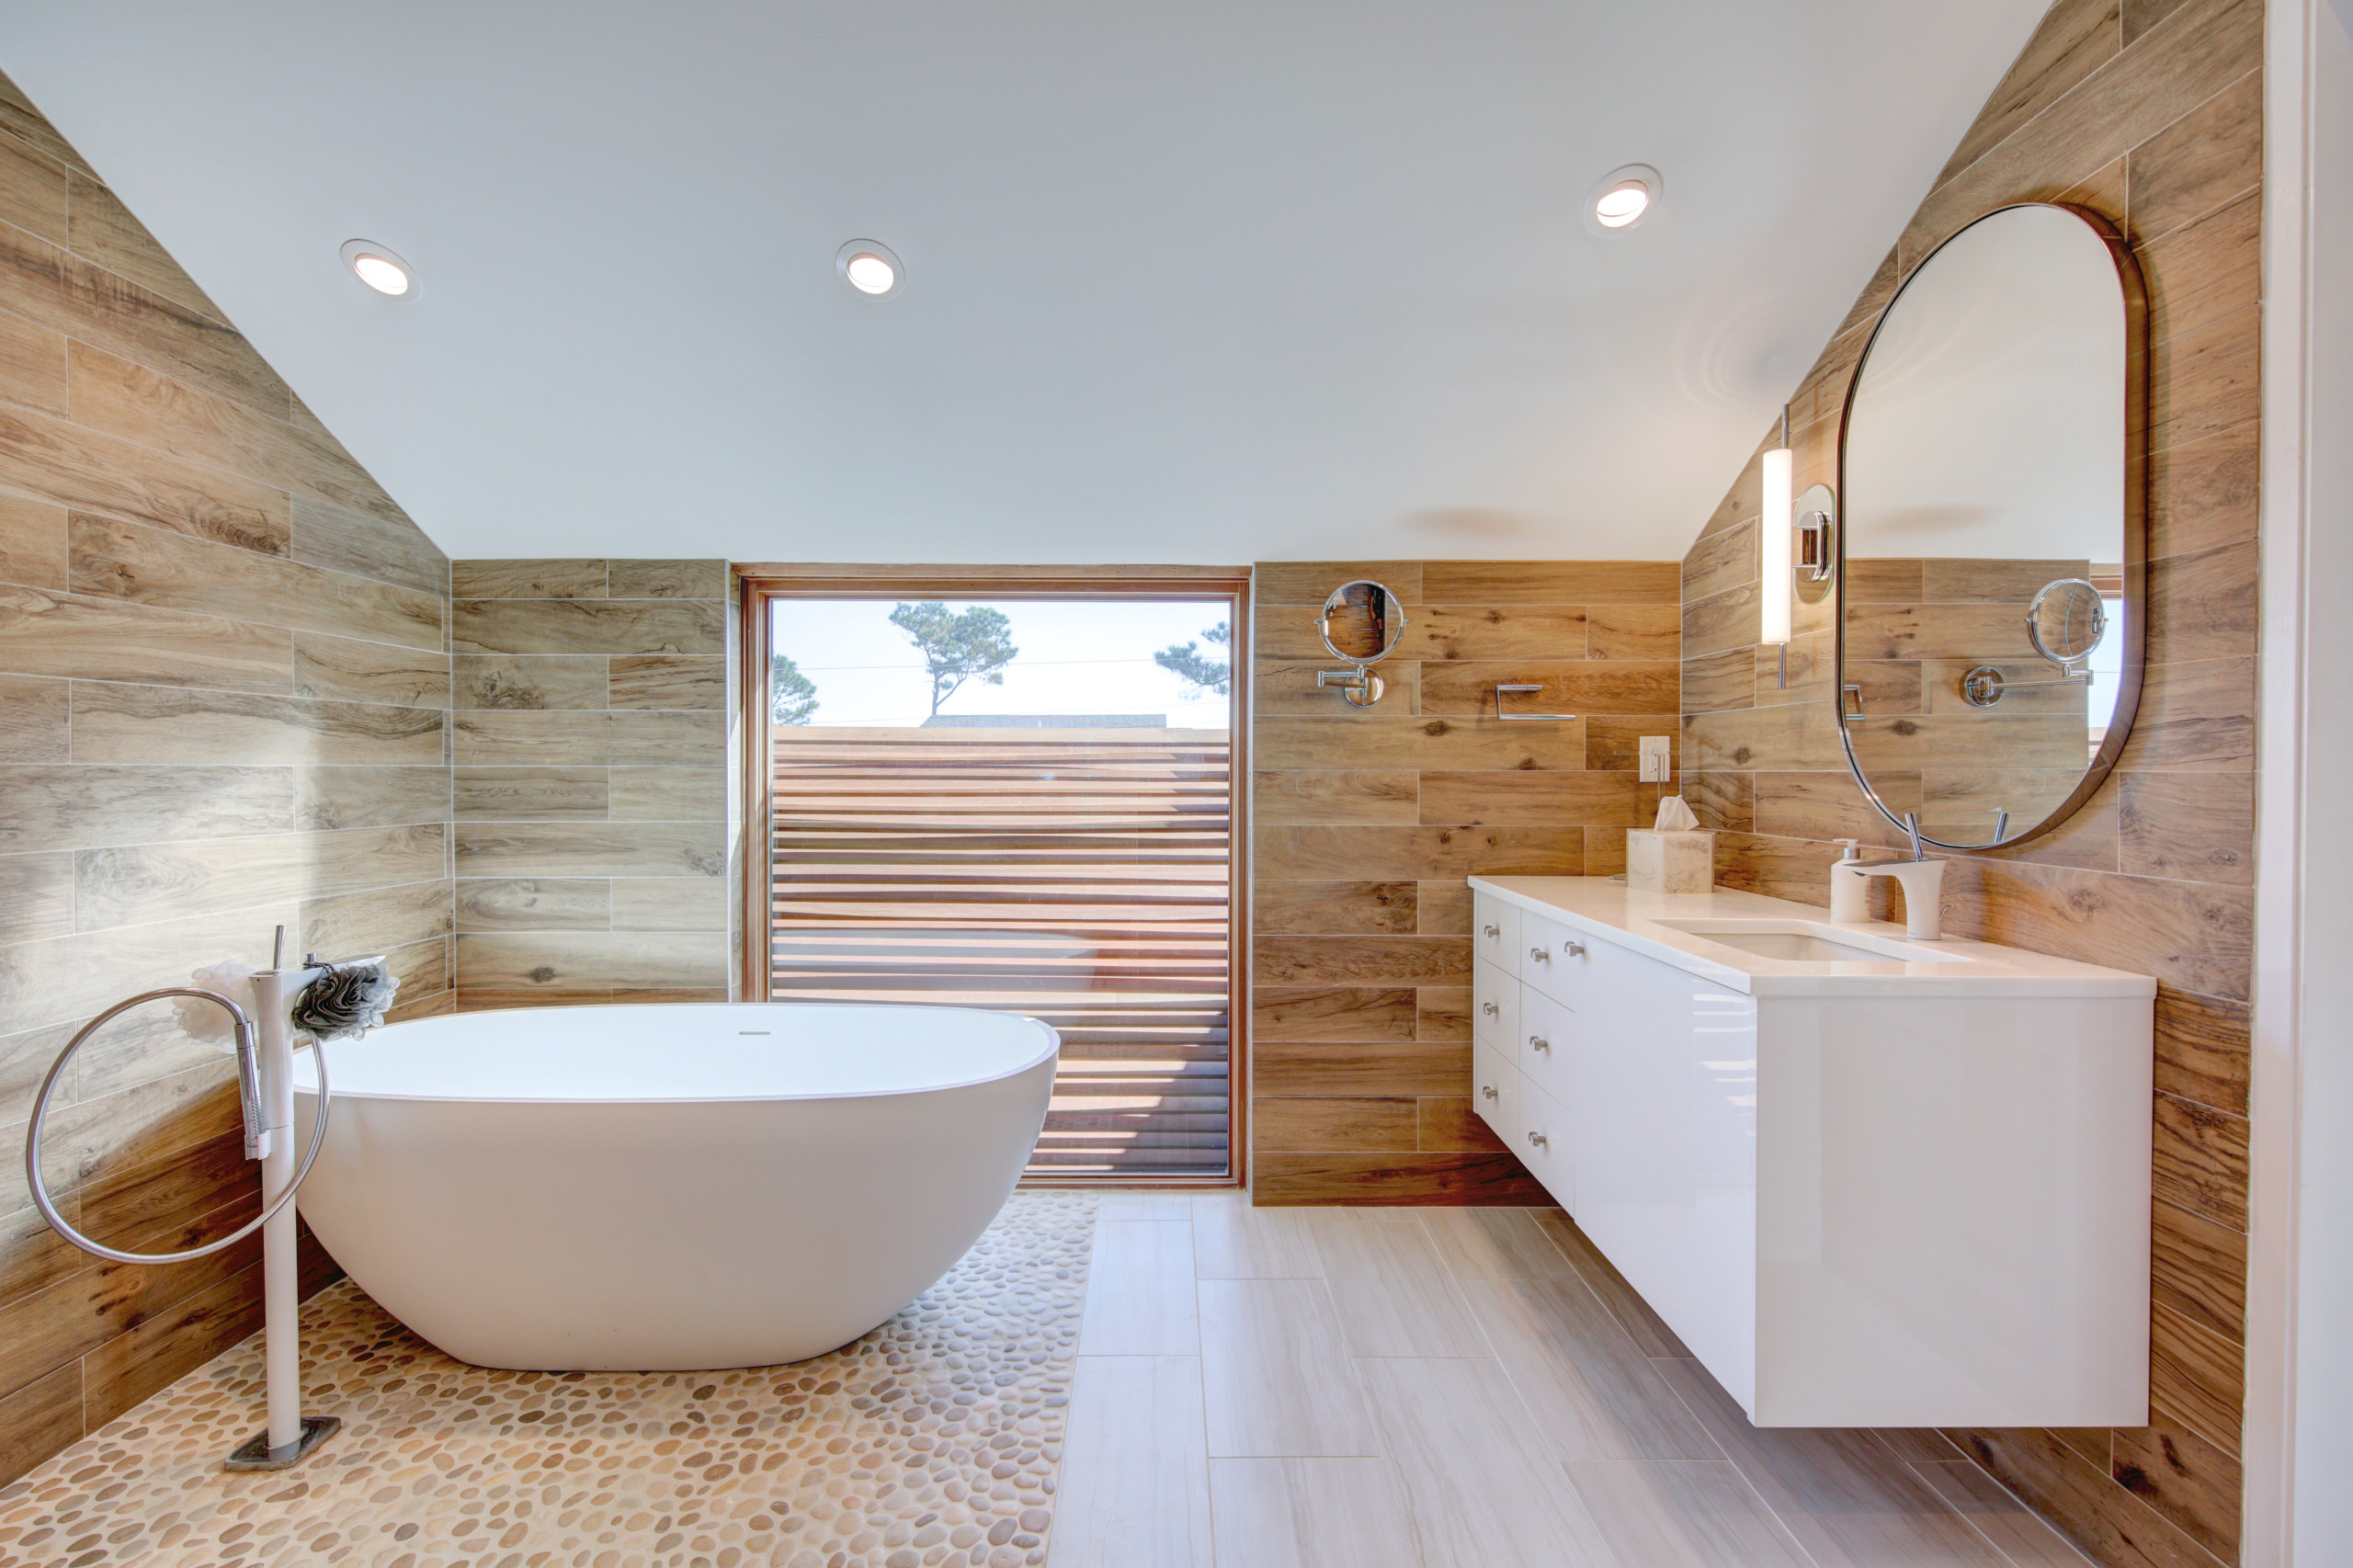 75 Wood Look Tile Bathroom Ideas You Ll